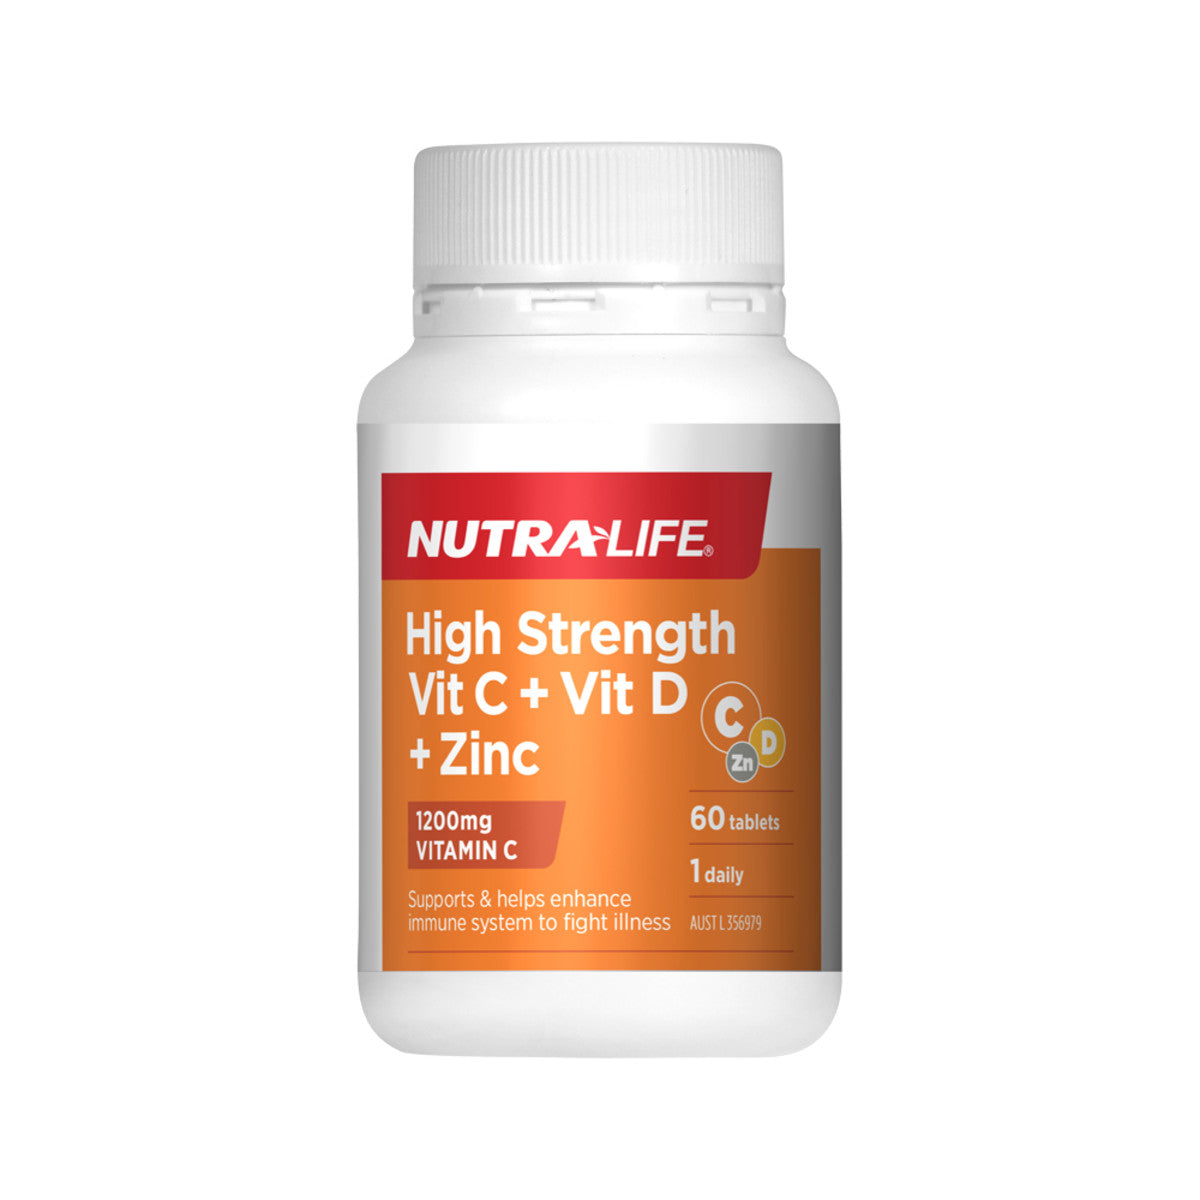 NutraLife - High Strength Vit C + Vit D +Zinc